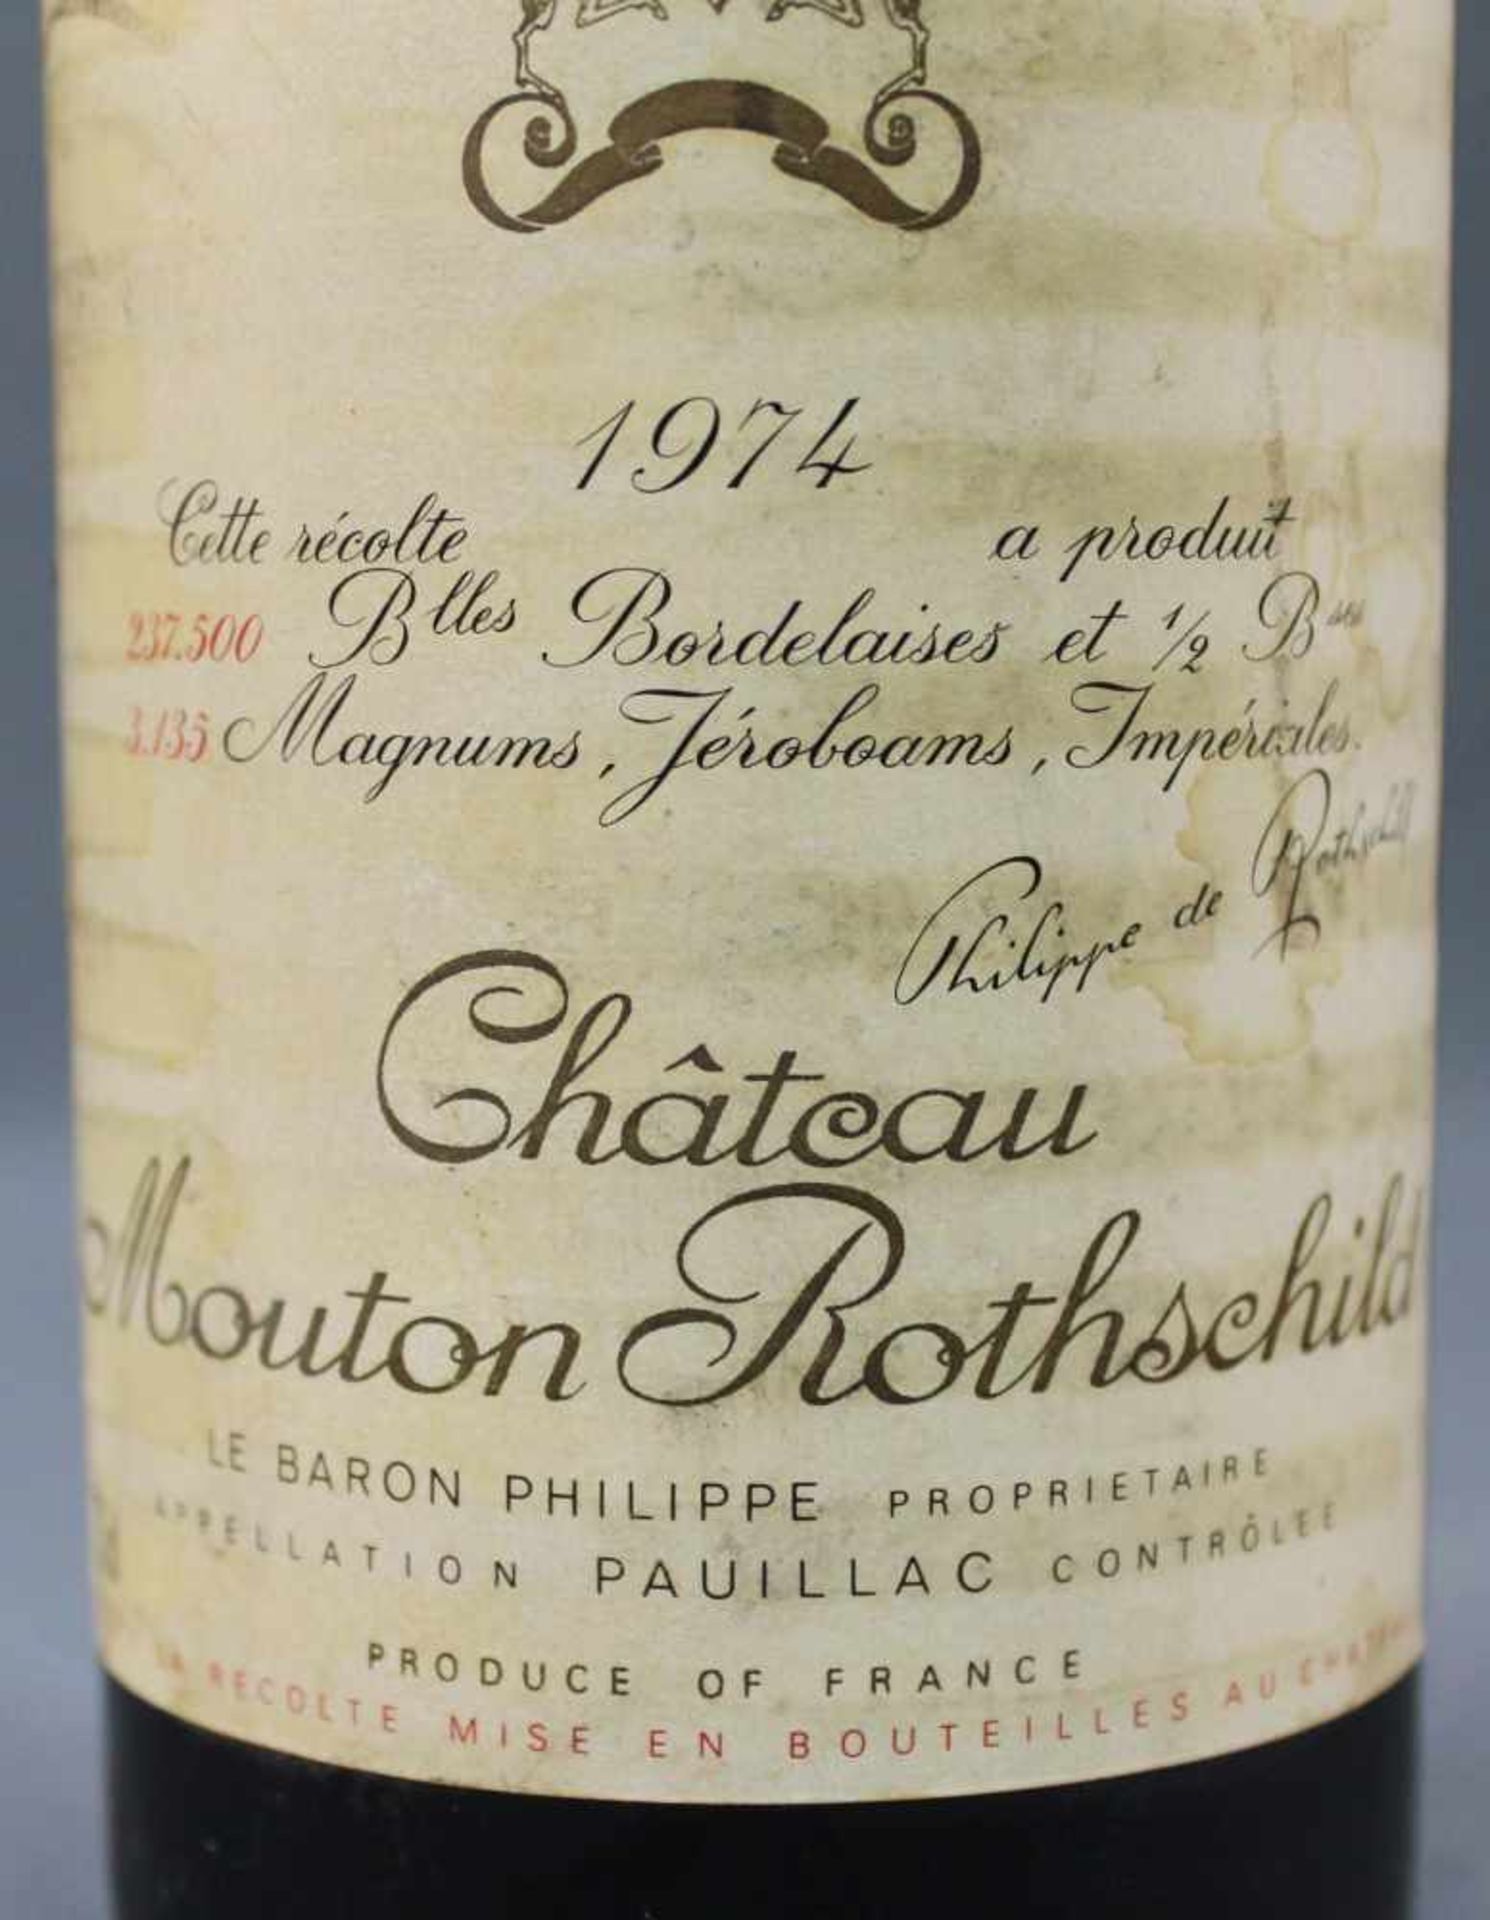 Chateau Mouton Rothschild, 1974. Grand Cru Classé. Eine ganze Flasche. Bordeaux. Rotwein. - Bild 3 aus 6